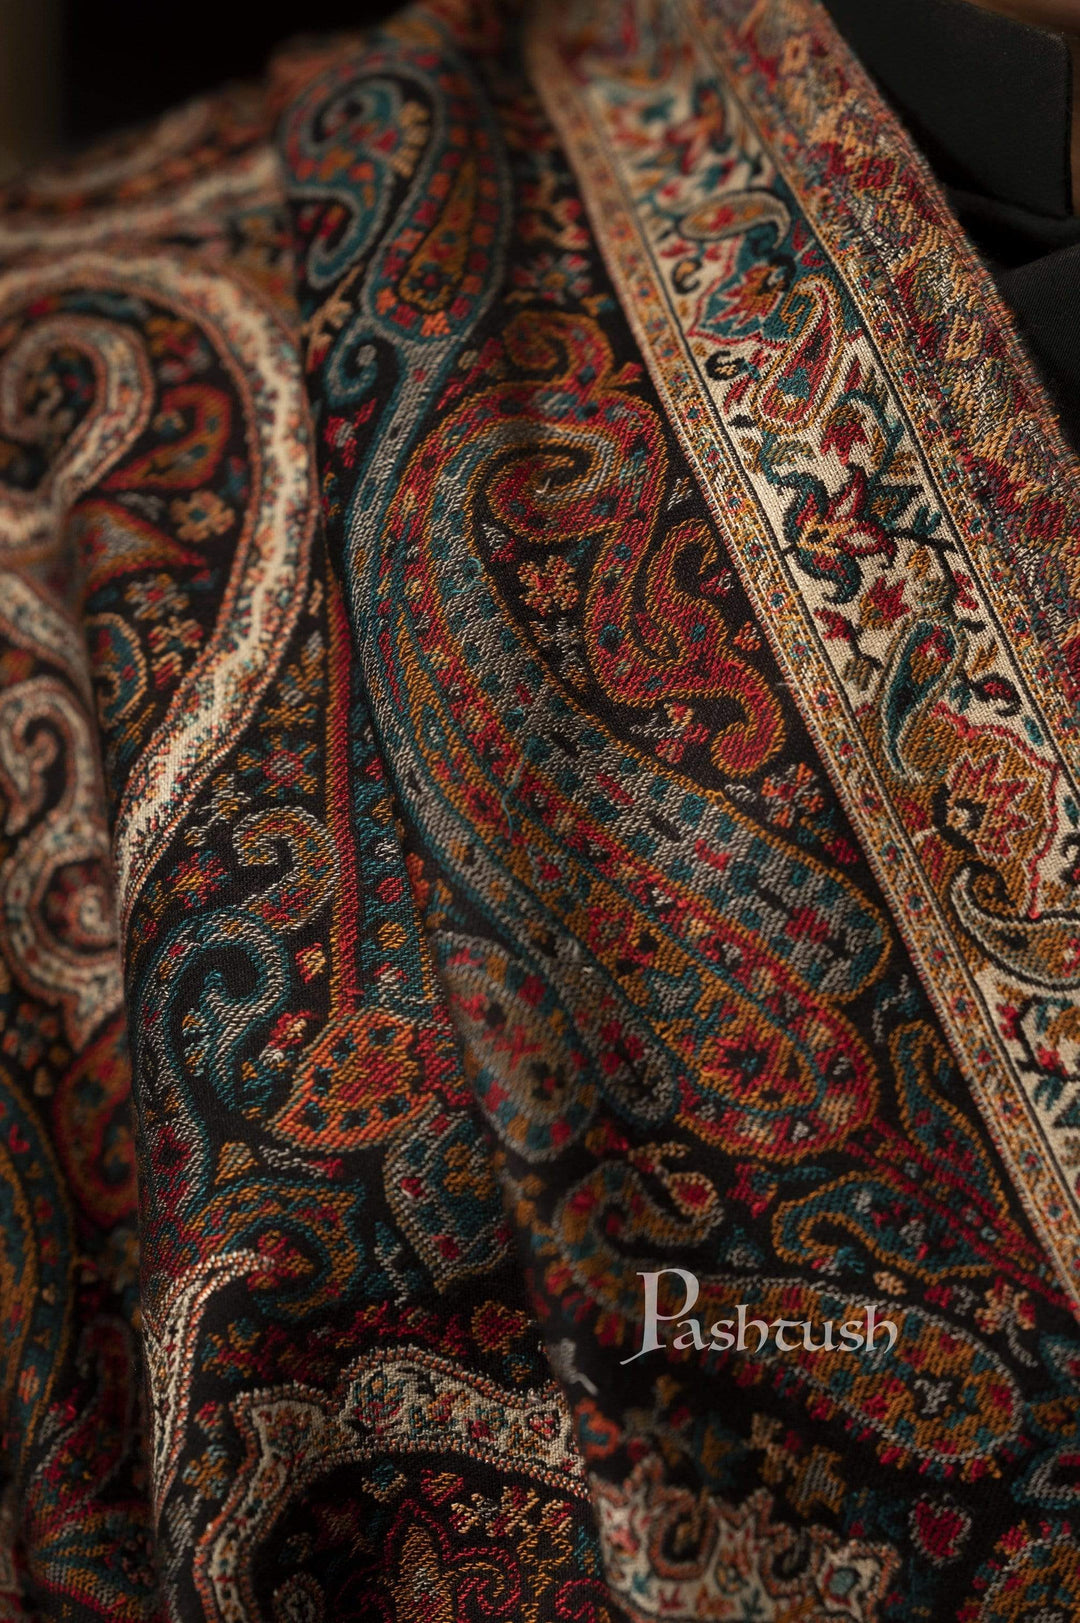 Pashtush India 100x200 Pashtush Mens Antique Look Heritage Design, Jamawar Stole, Fine Wool